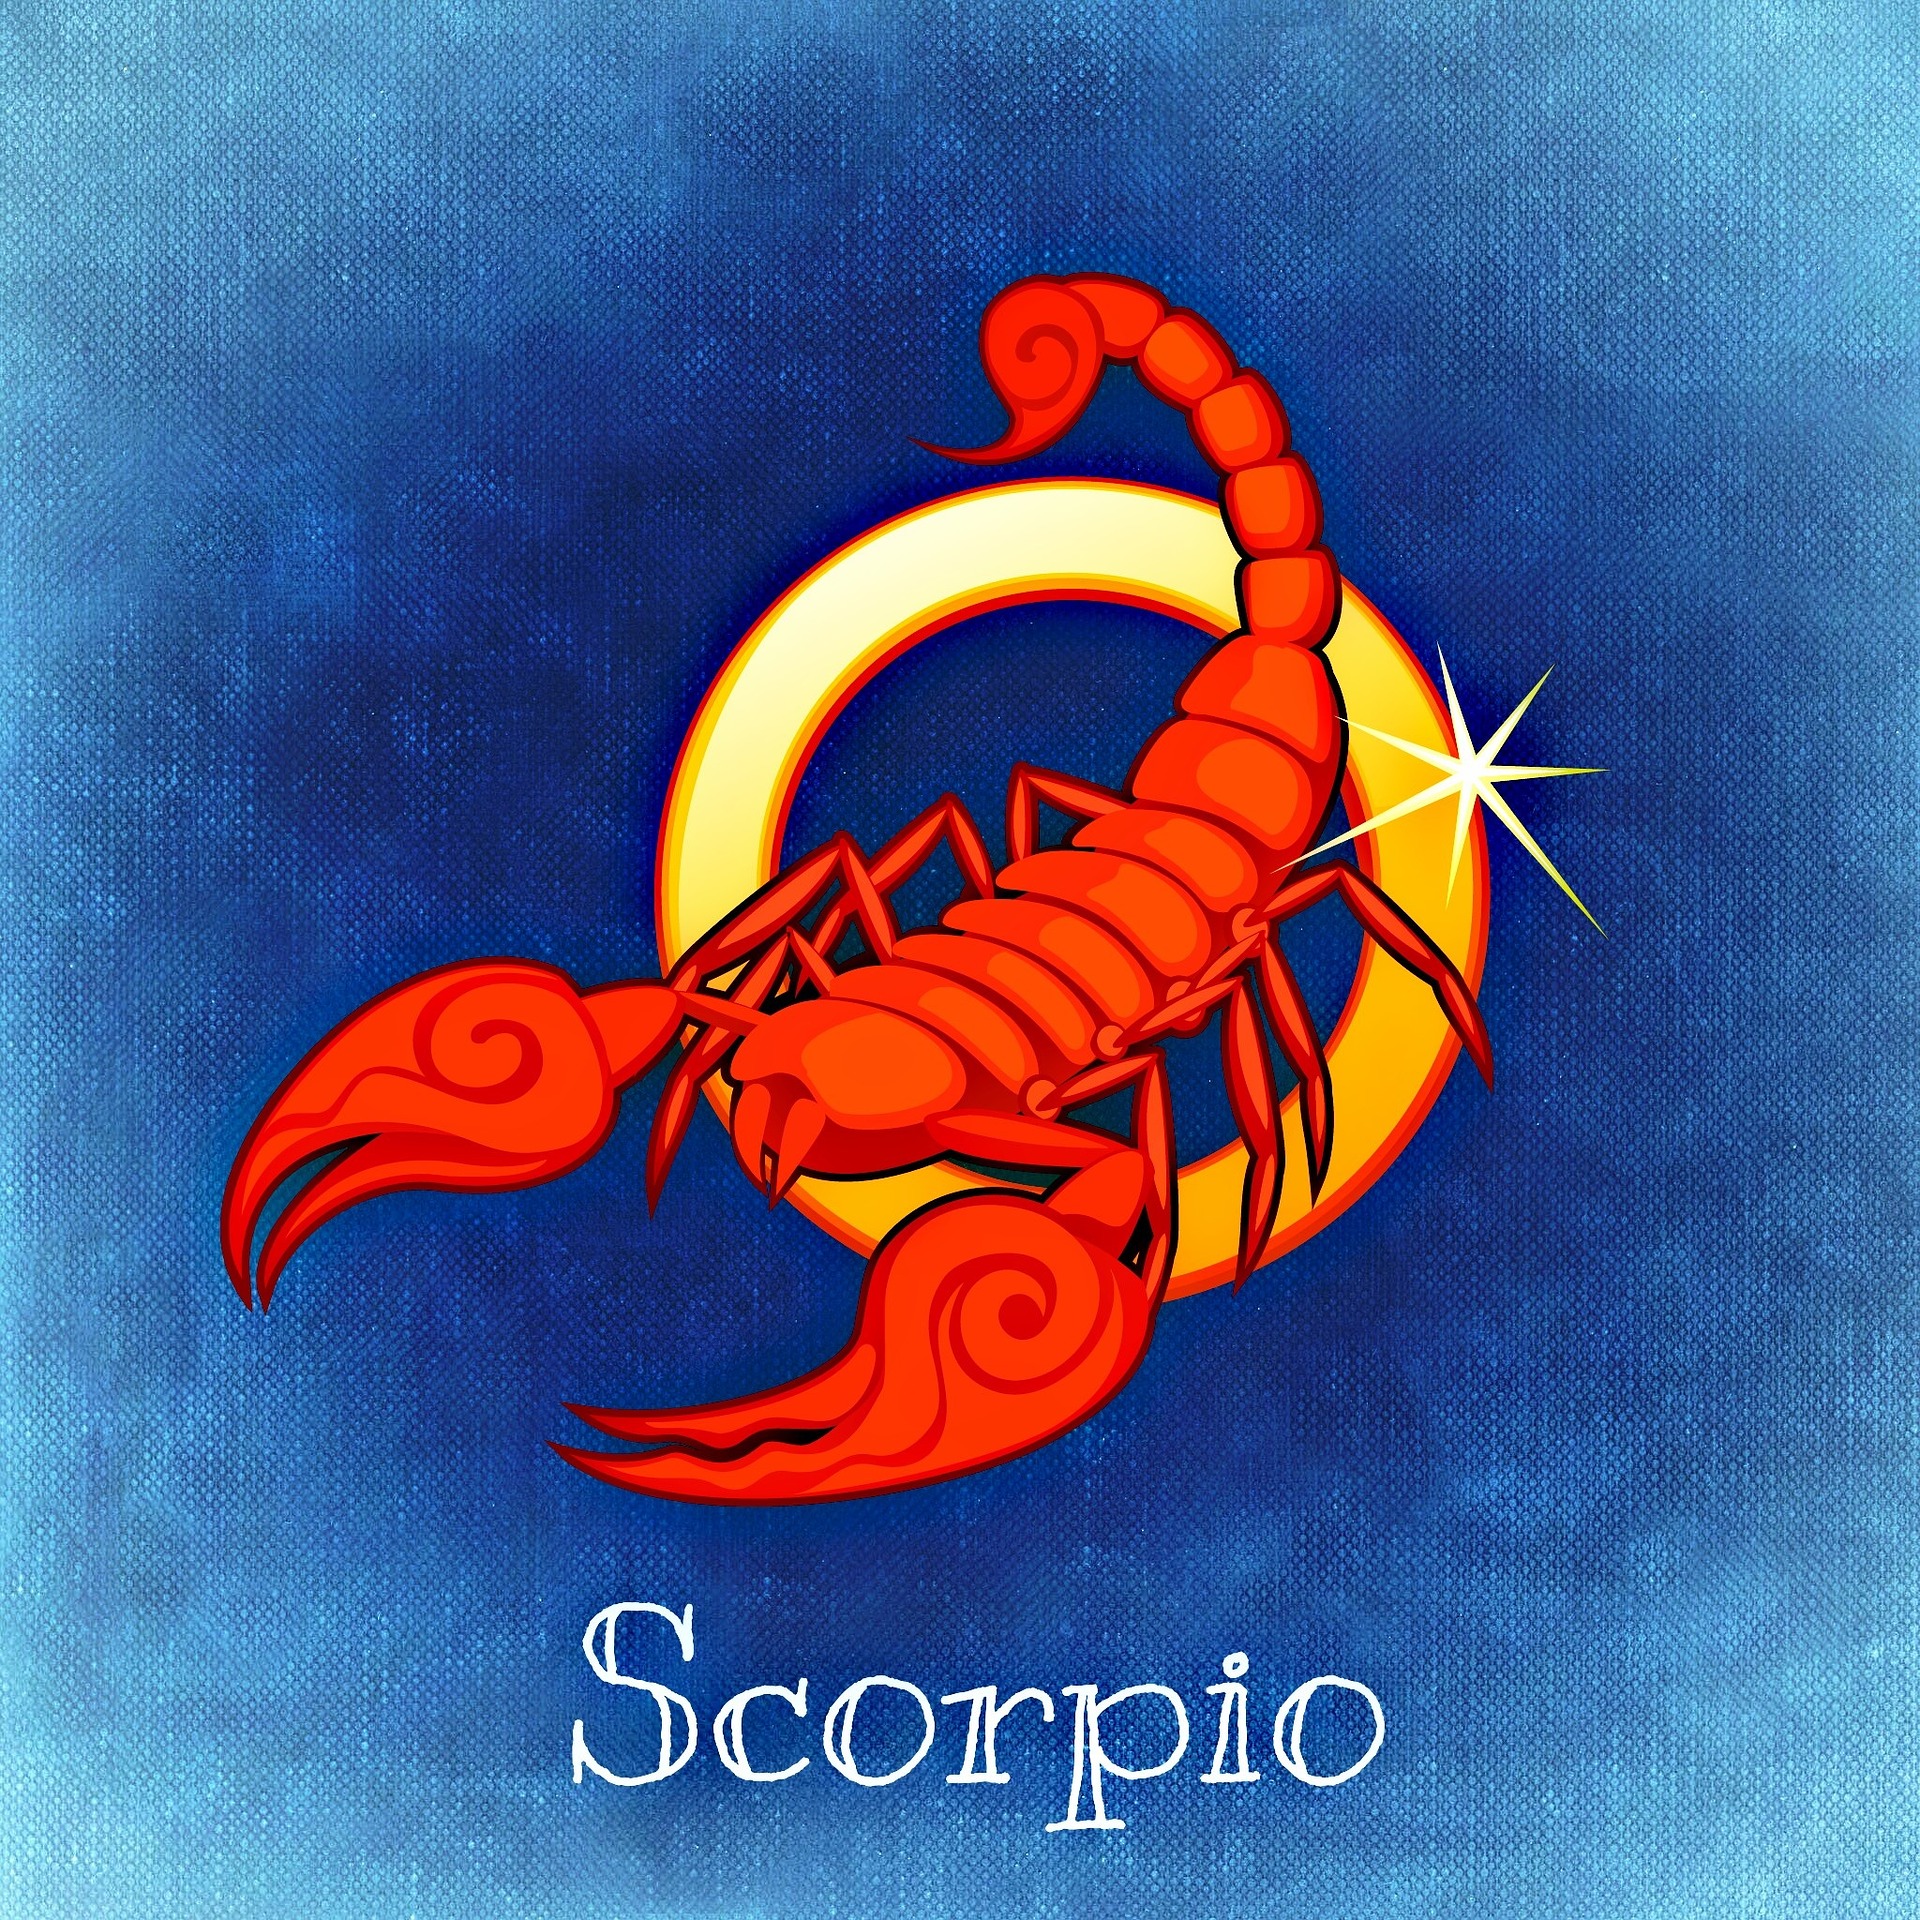 Scorpio Horoscope - Friendship, Love, Relationship, Career